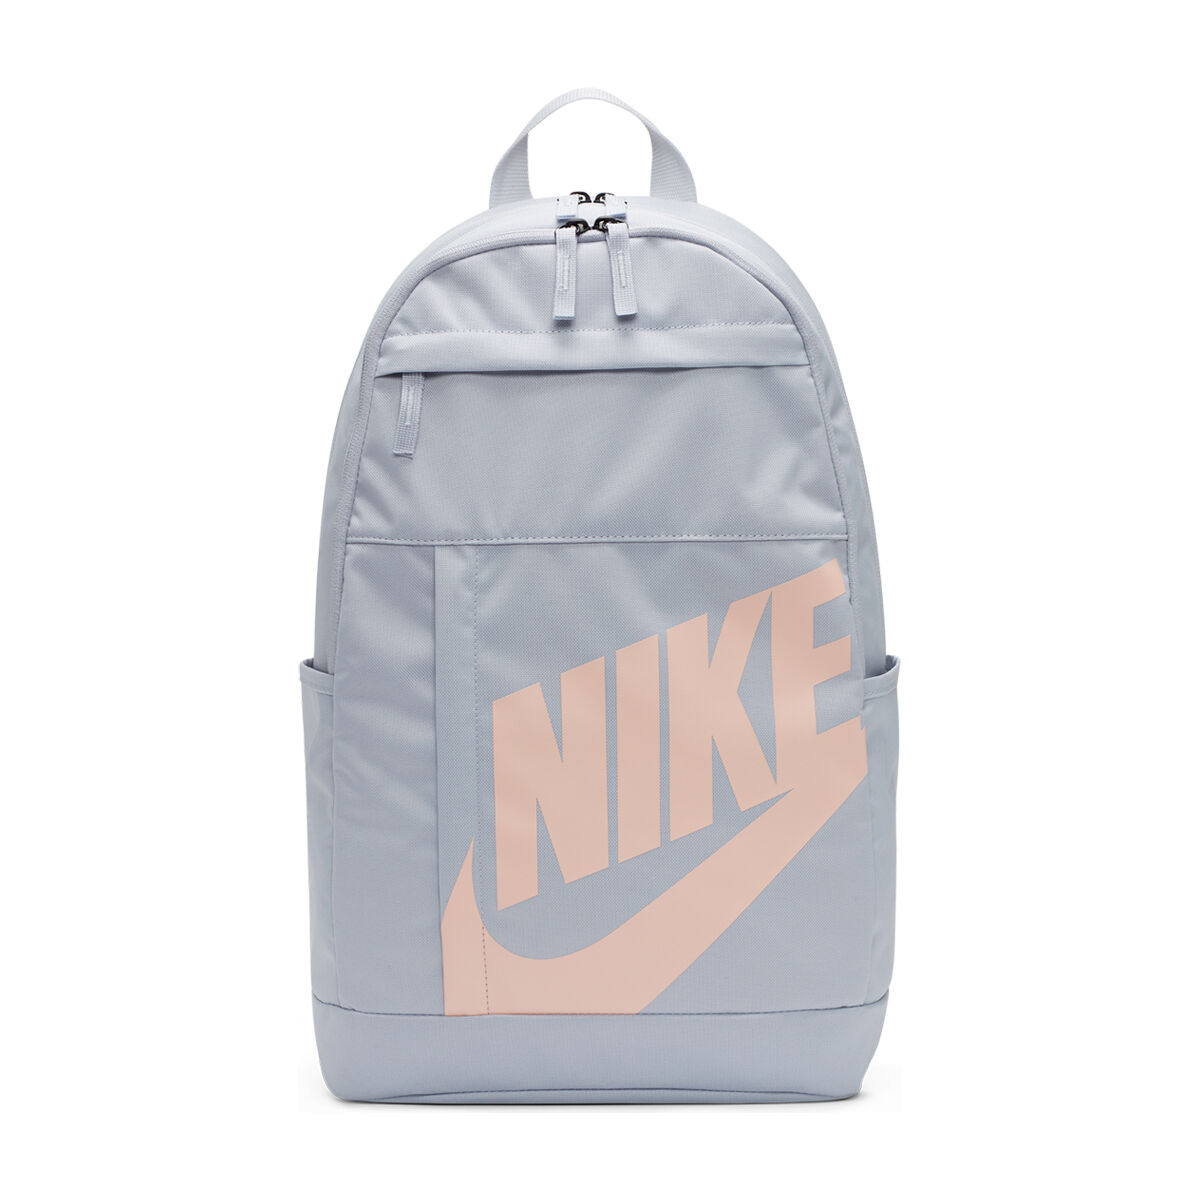 nike school bags for girl